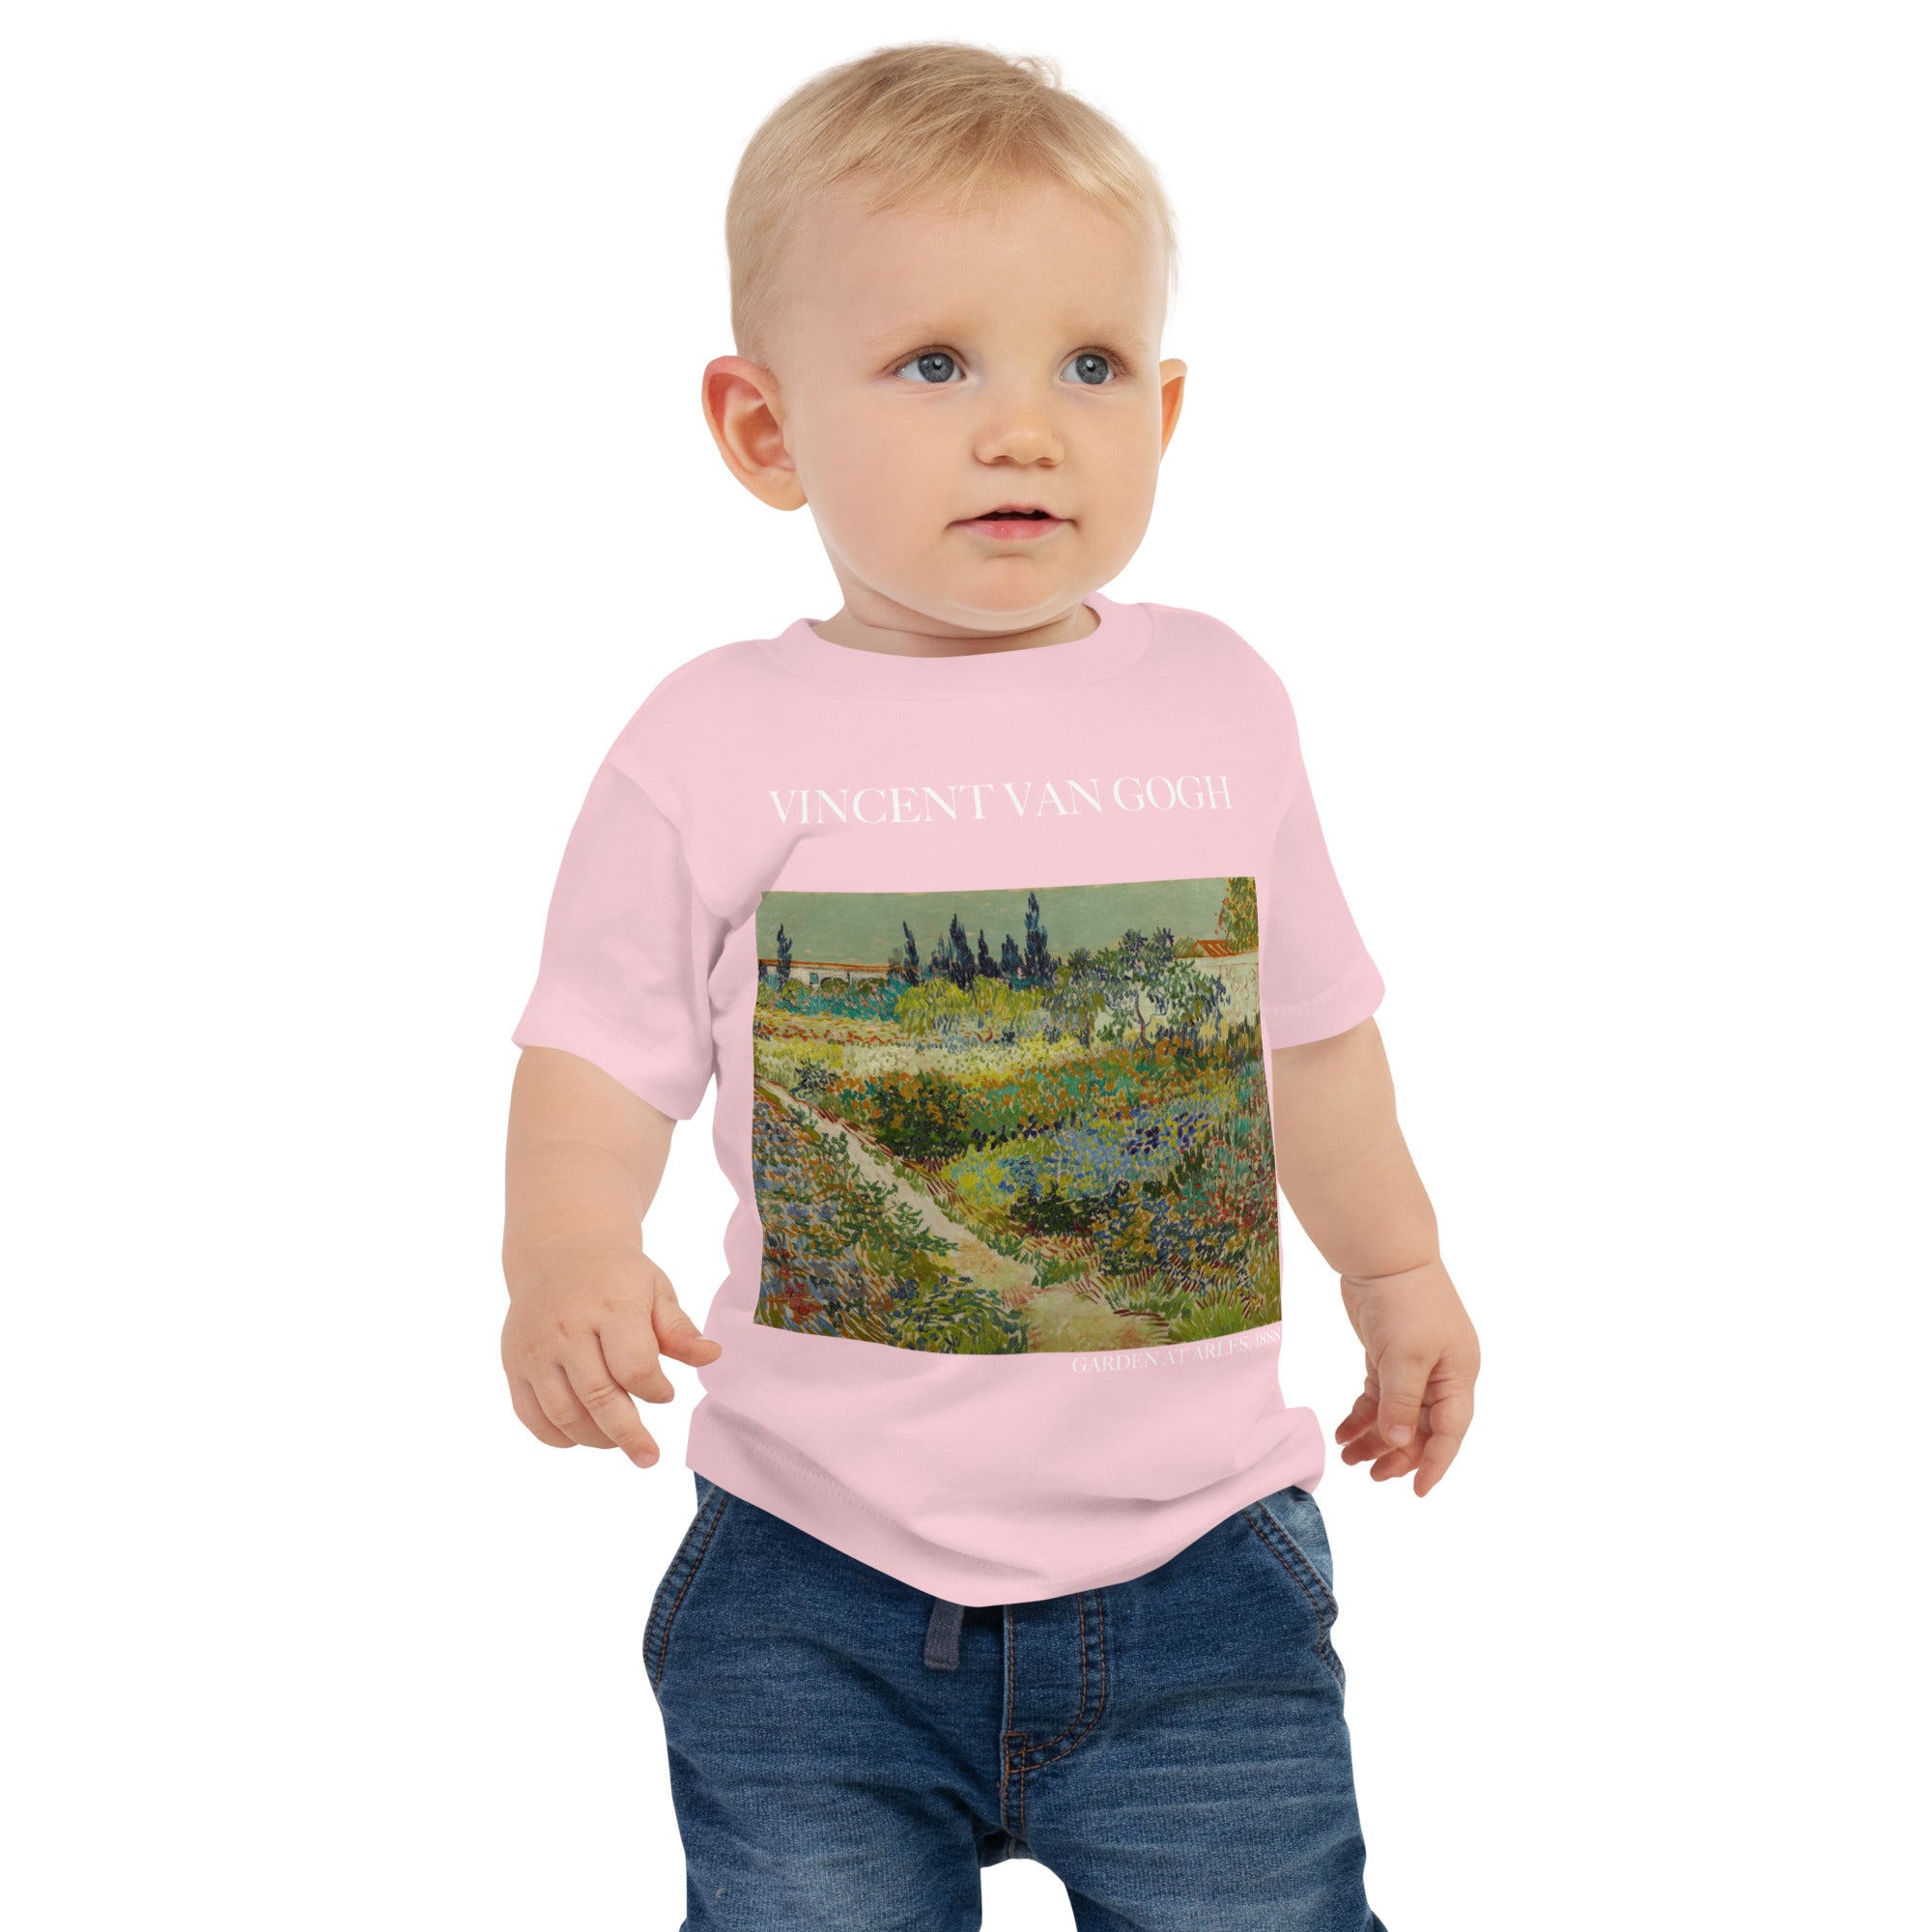 Vincent van Gogh 'Garden at Arles' Famous Painting Baby Staple T-Shirt | Premium Baby Art Tee